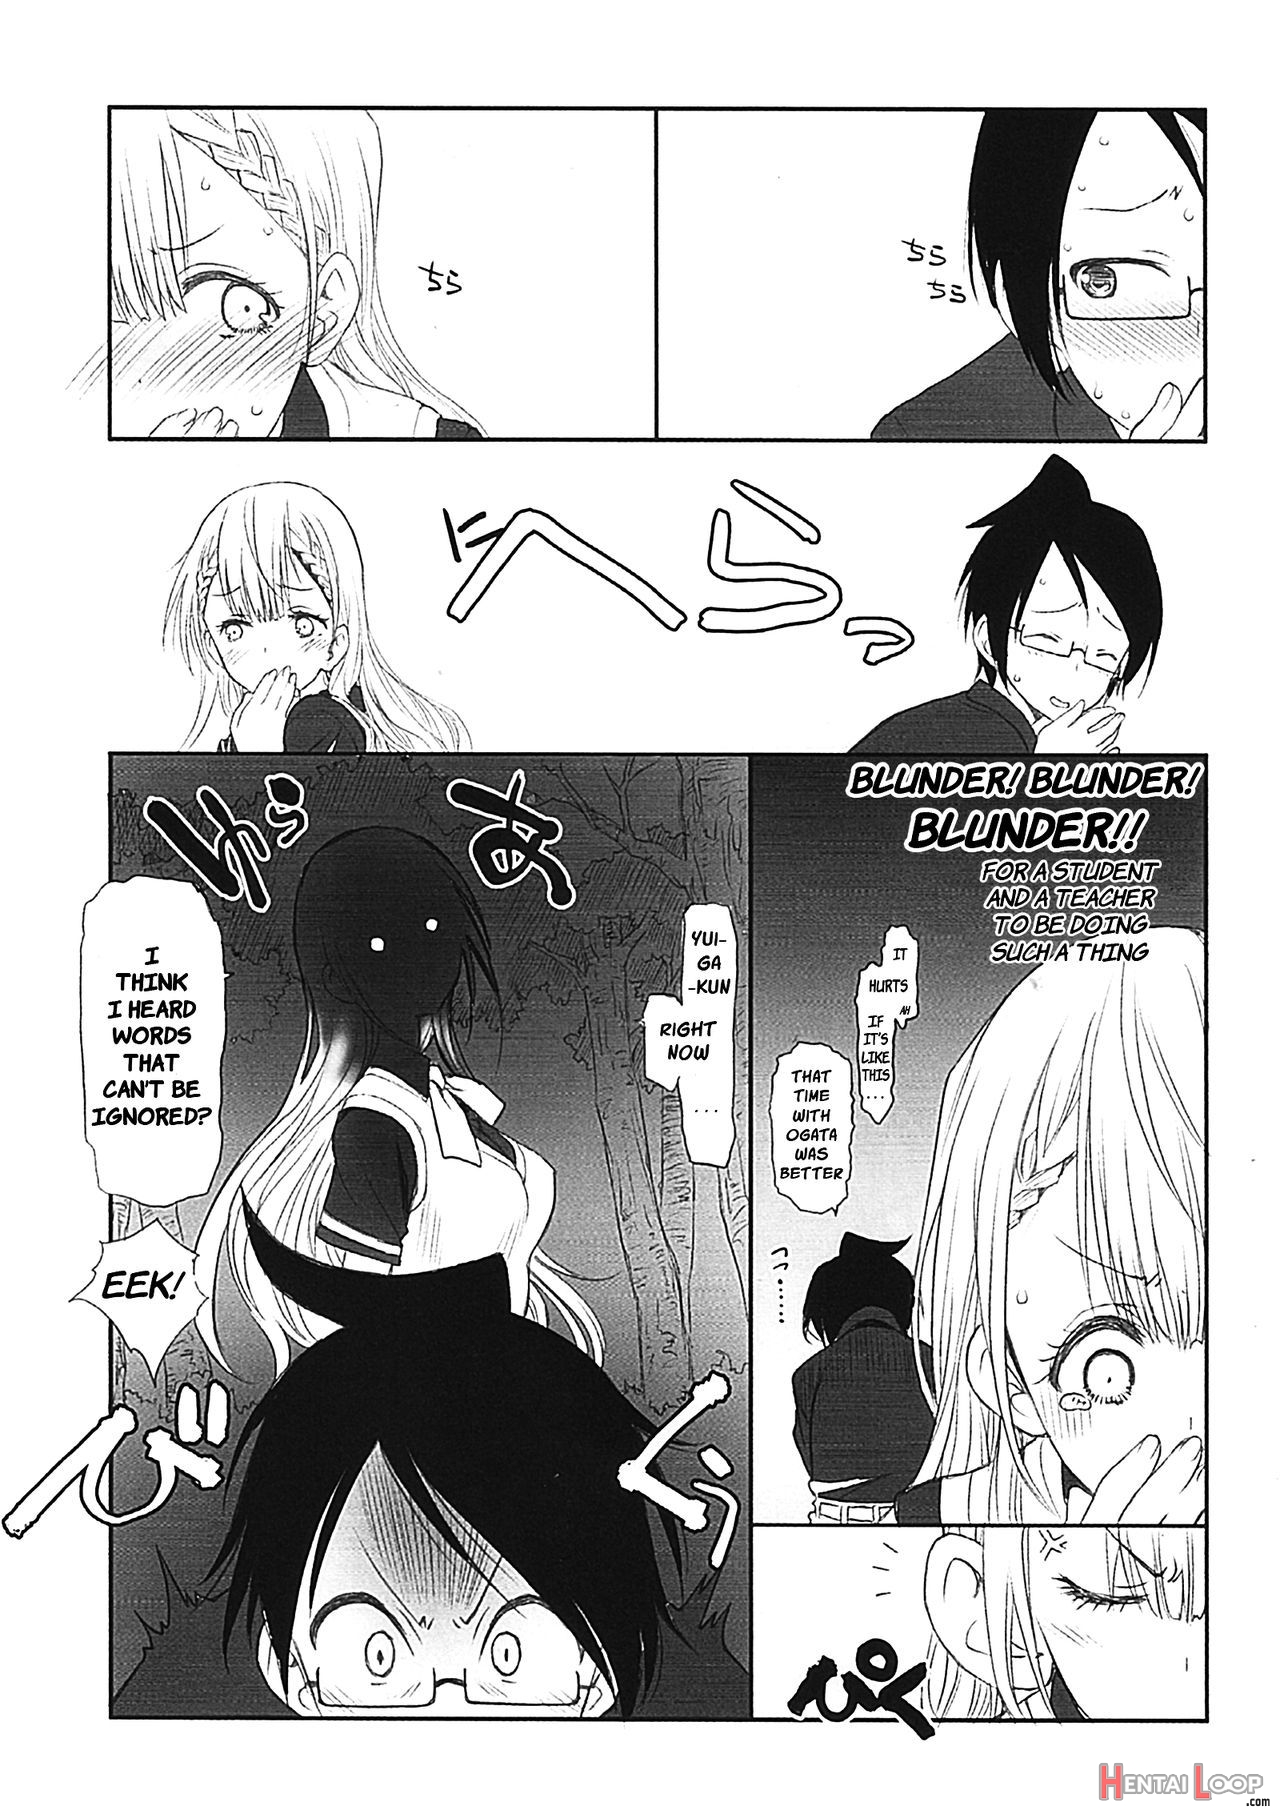 Sensei Can't Clean page 6